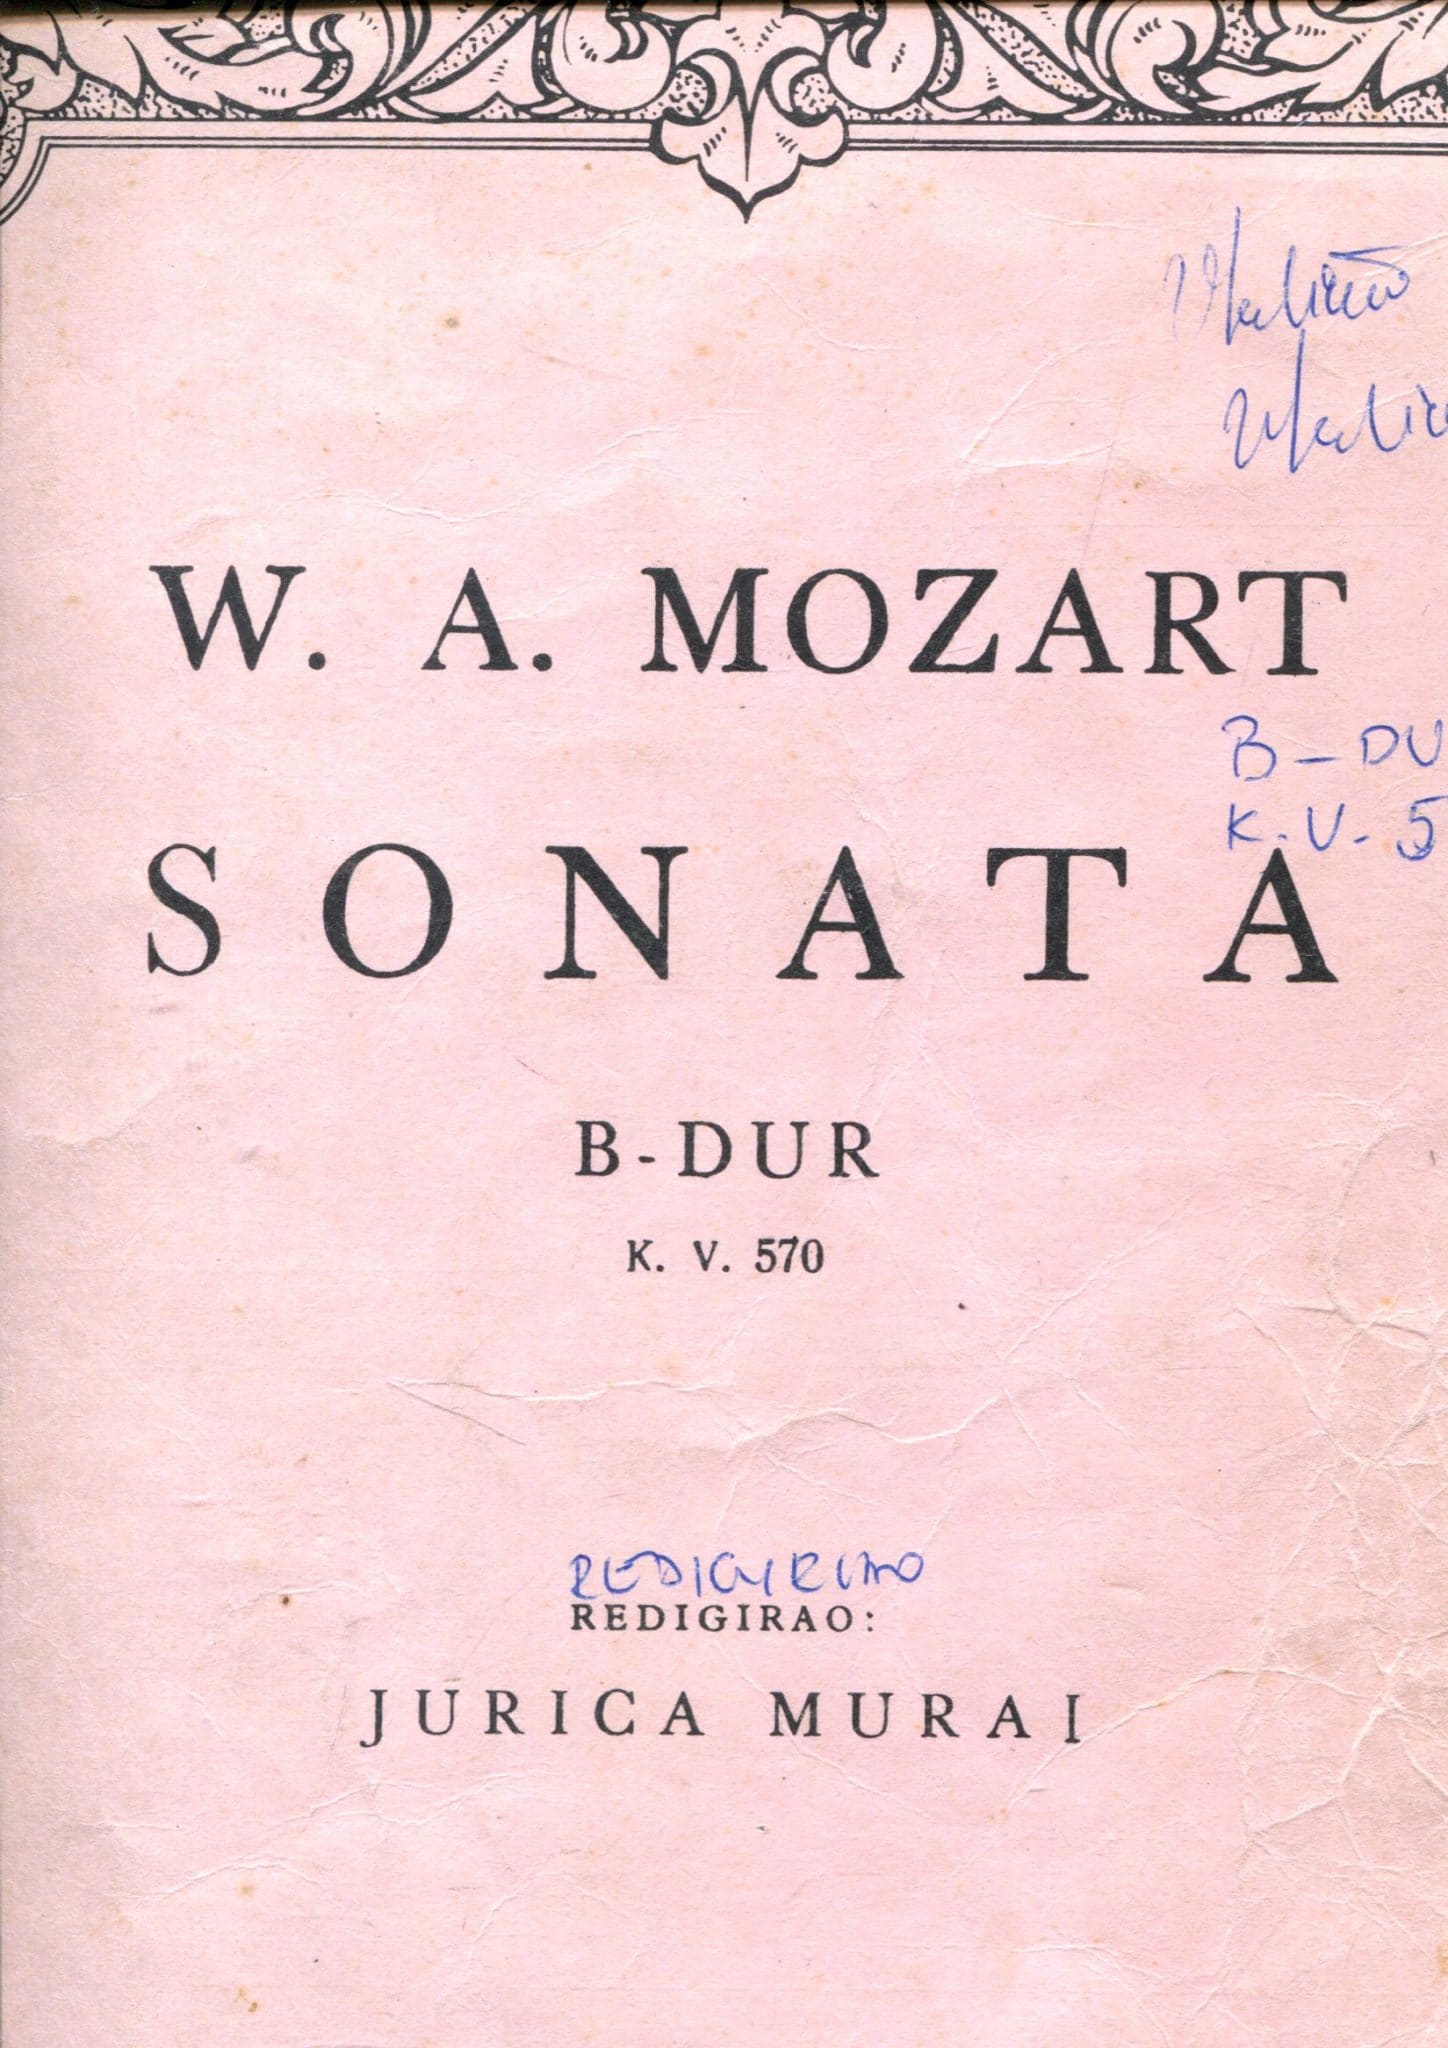 Sonata B-dur, K. V. 570 W. A. Mozart